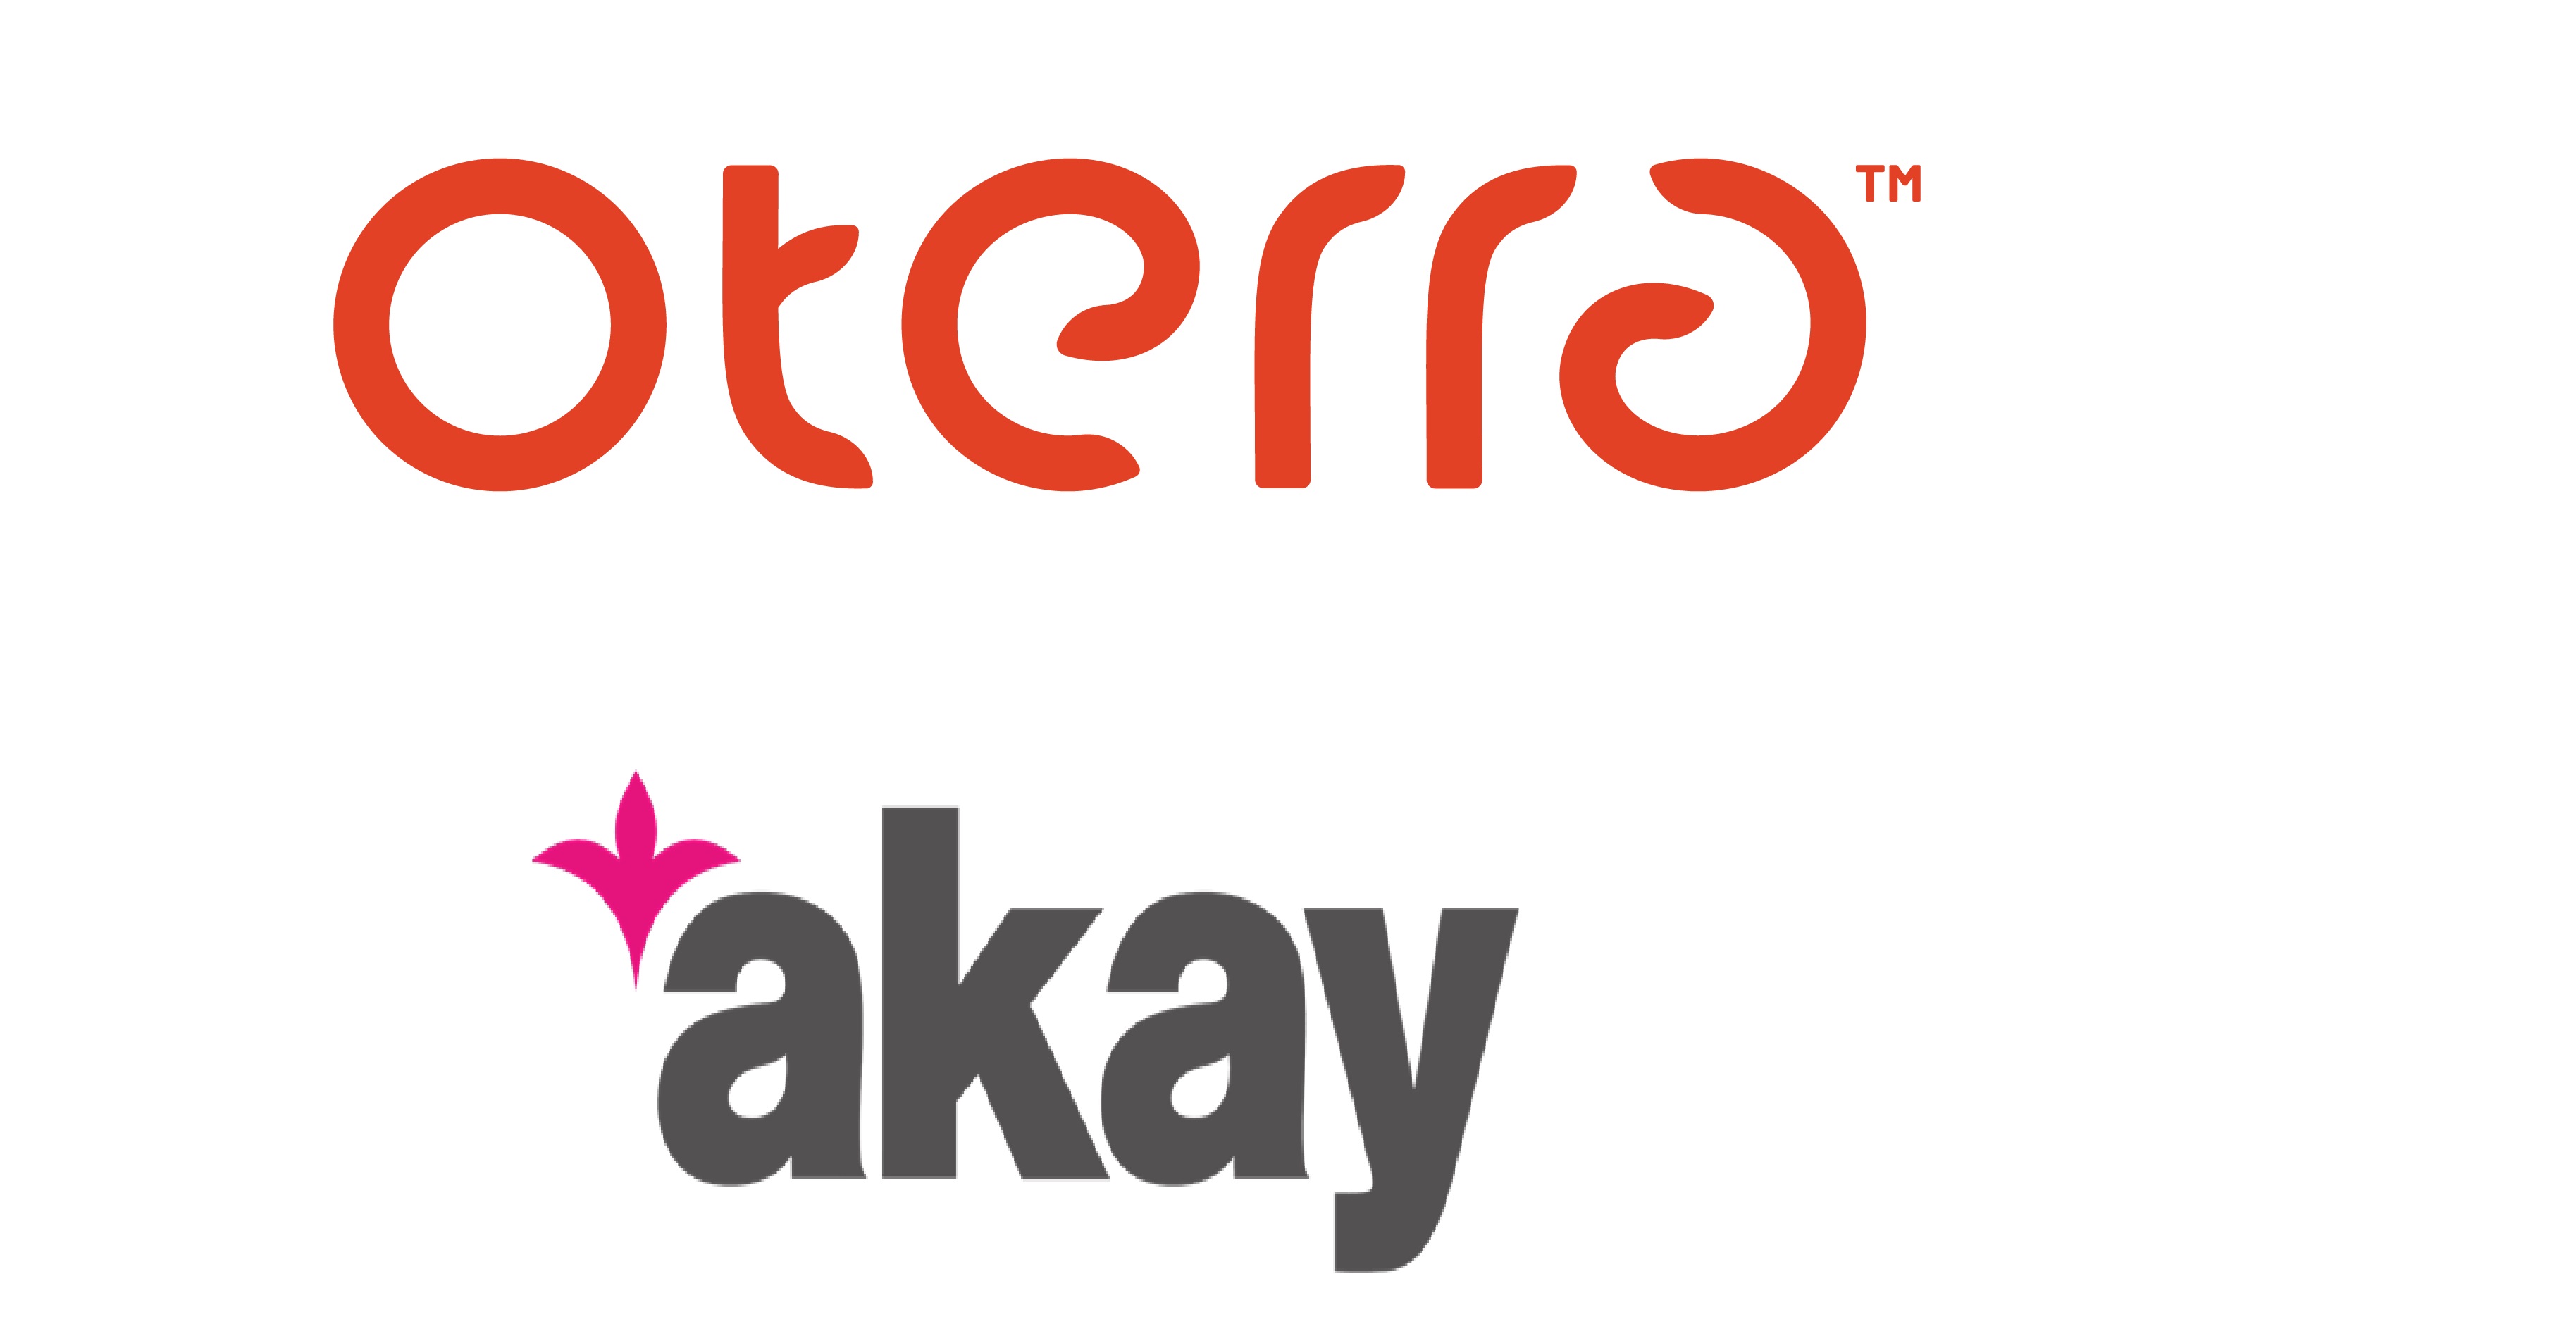 oterra and akay logos.jpg